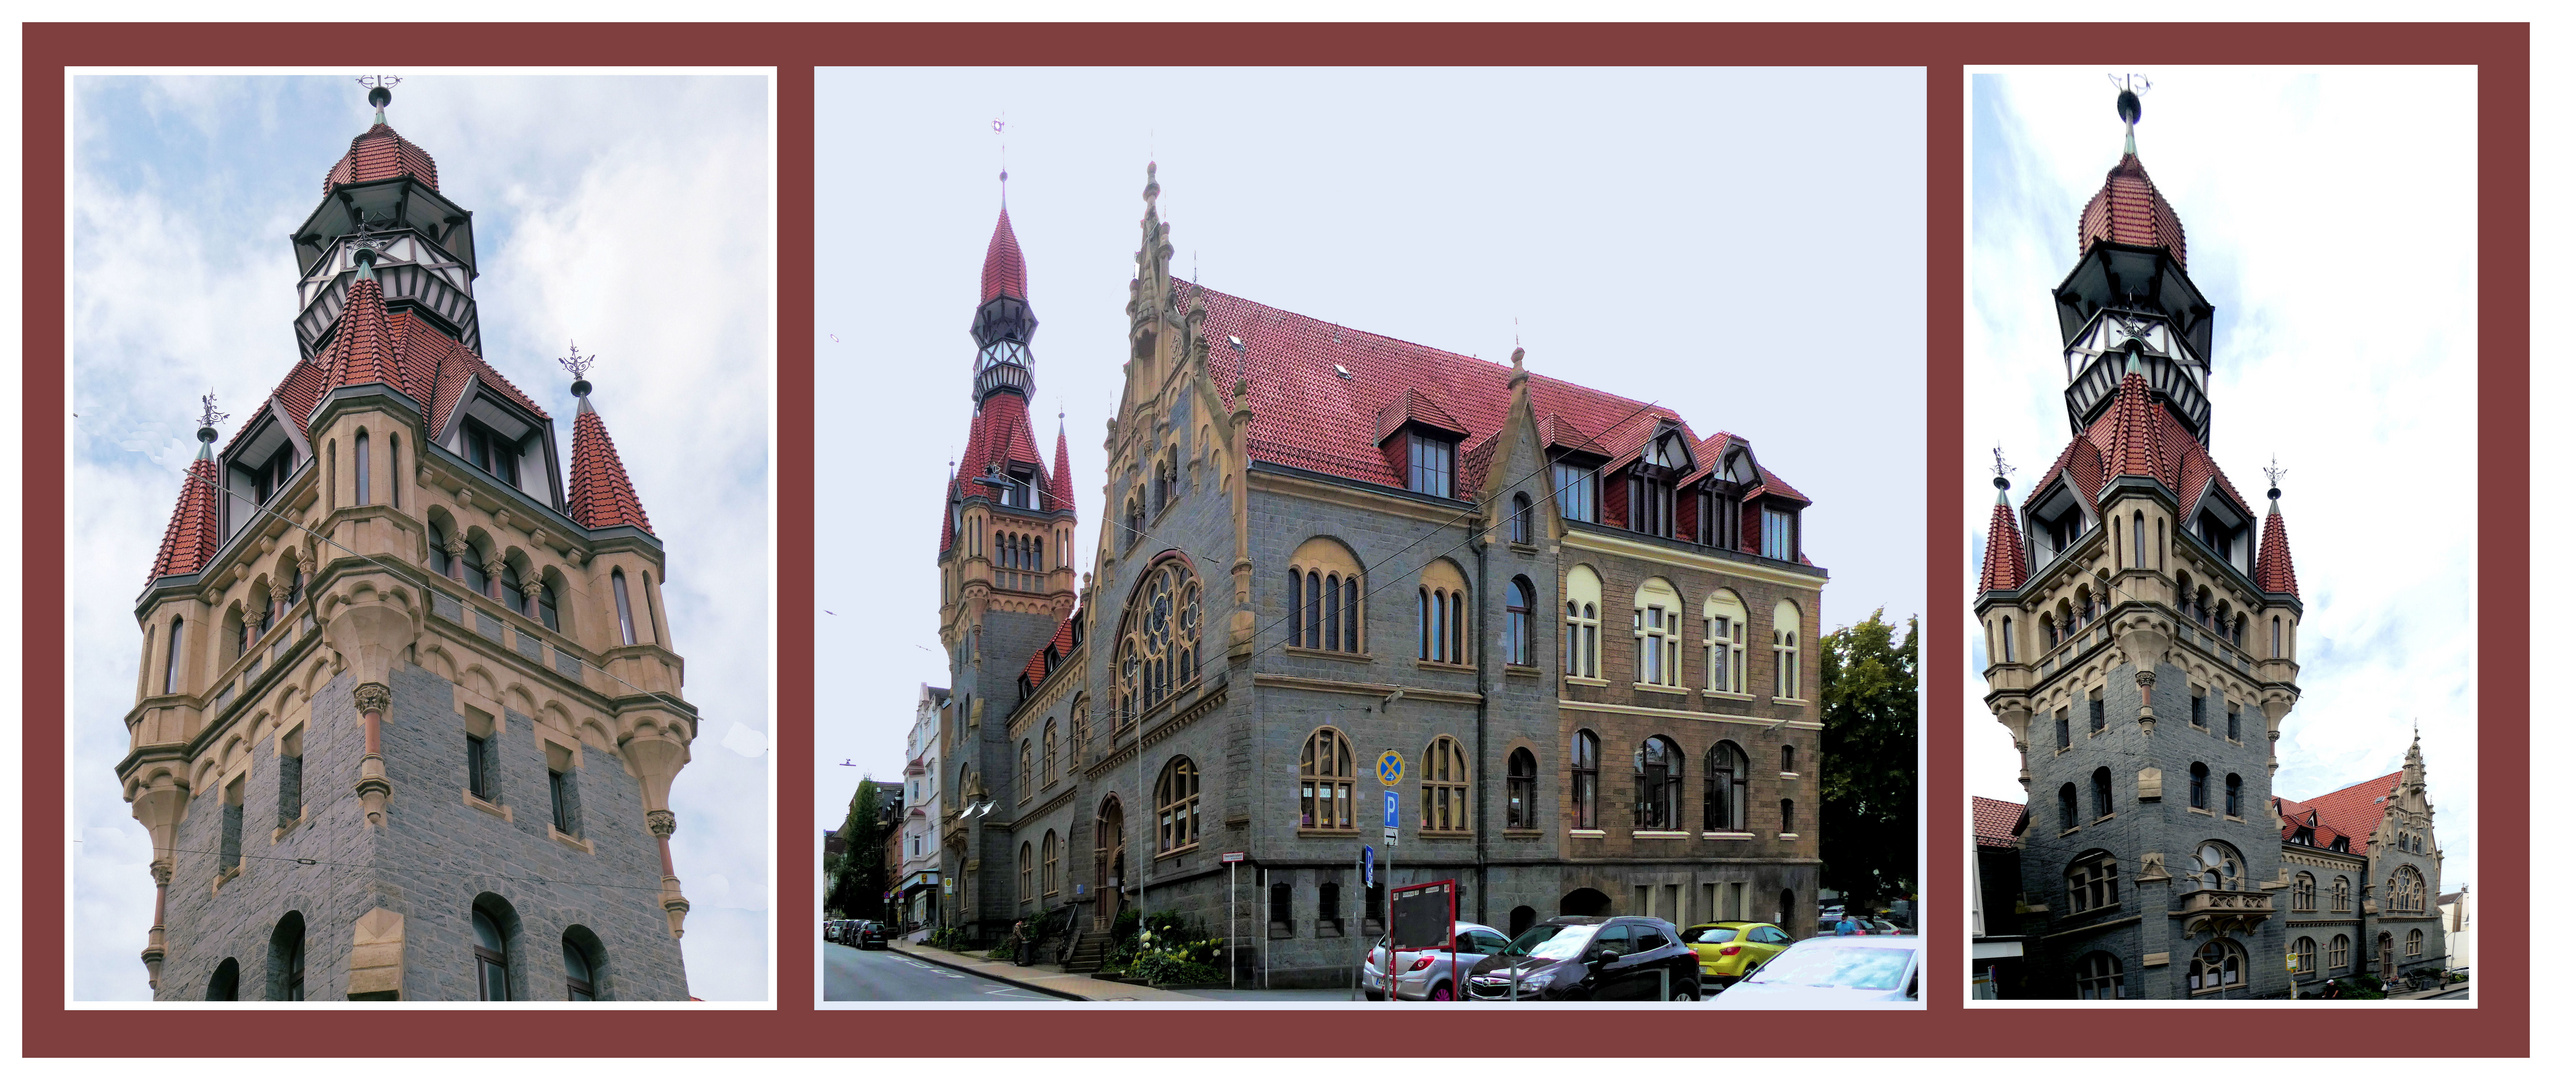 Rathaus in Vohwinkel